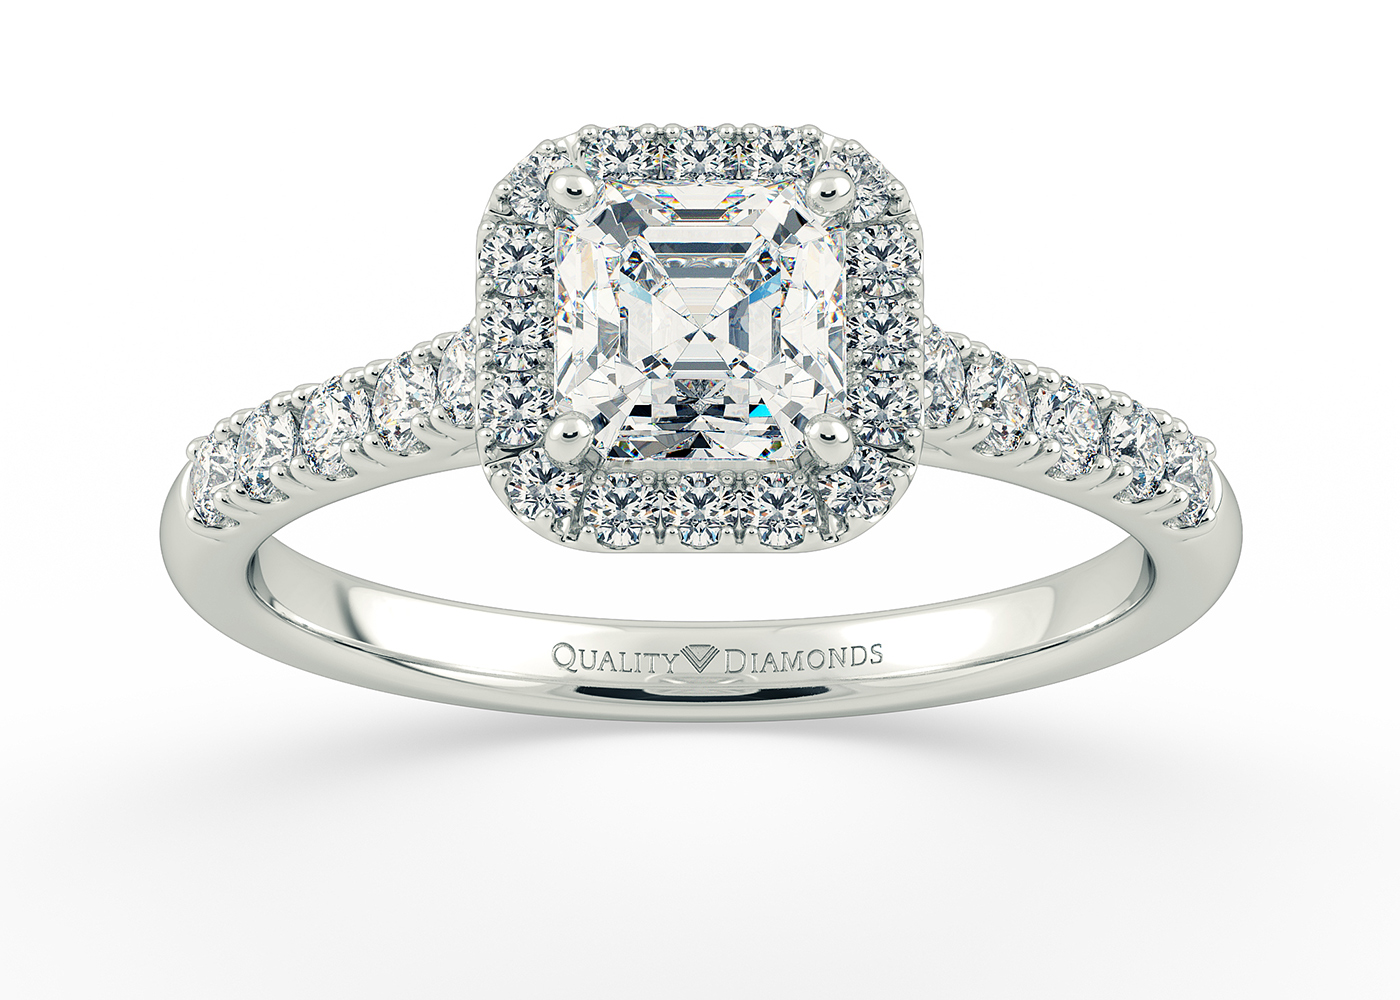 Two Carat Halo Asscher Diamond Ring in Platinum 950